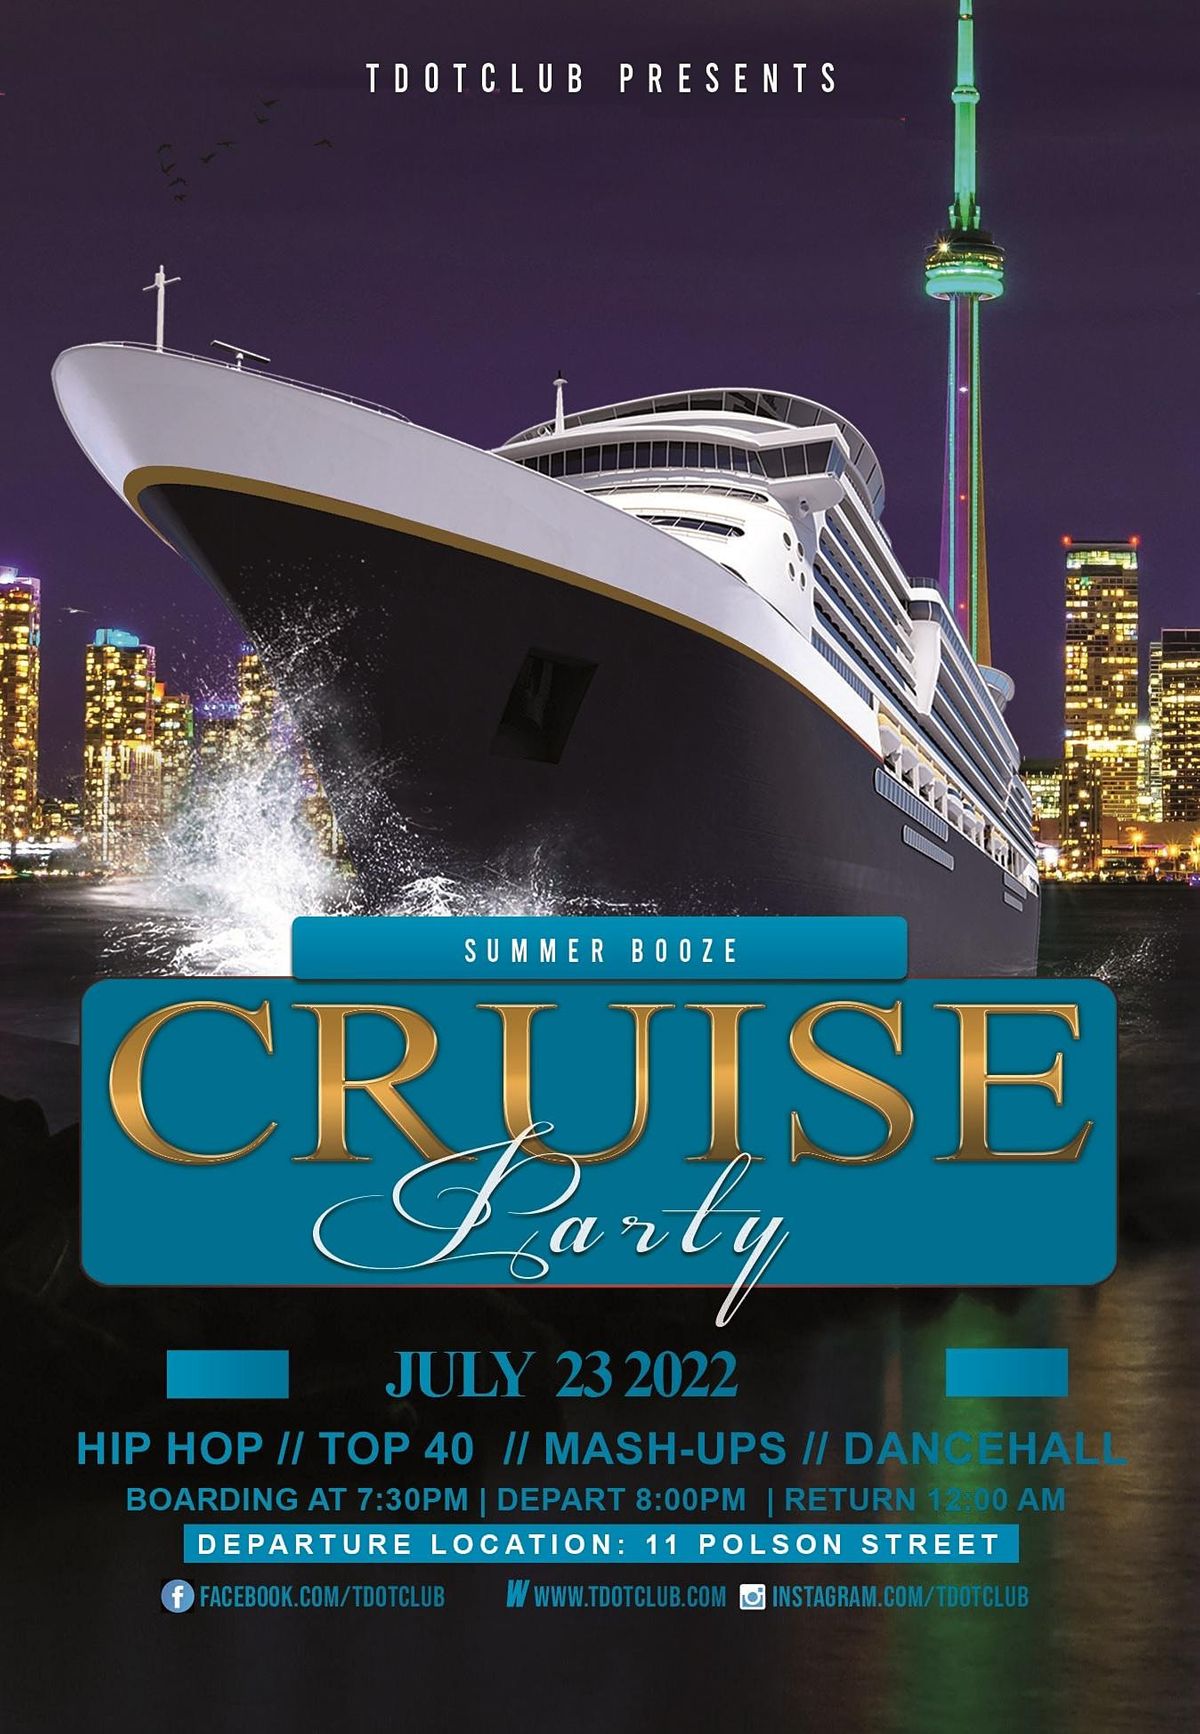 Tdotclub Summer booze cruise Saturday July 23rd 2022